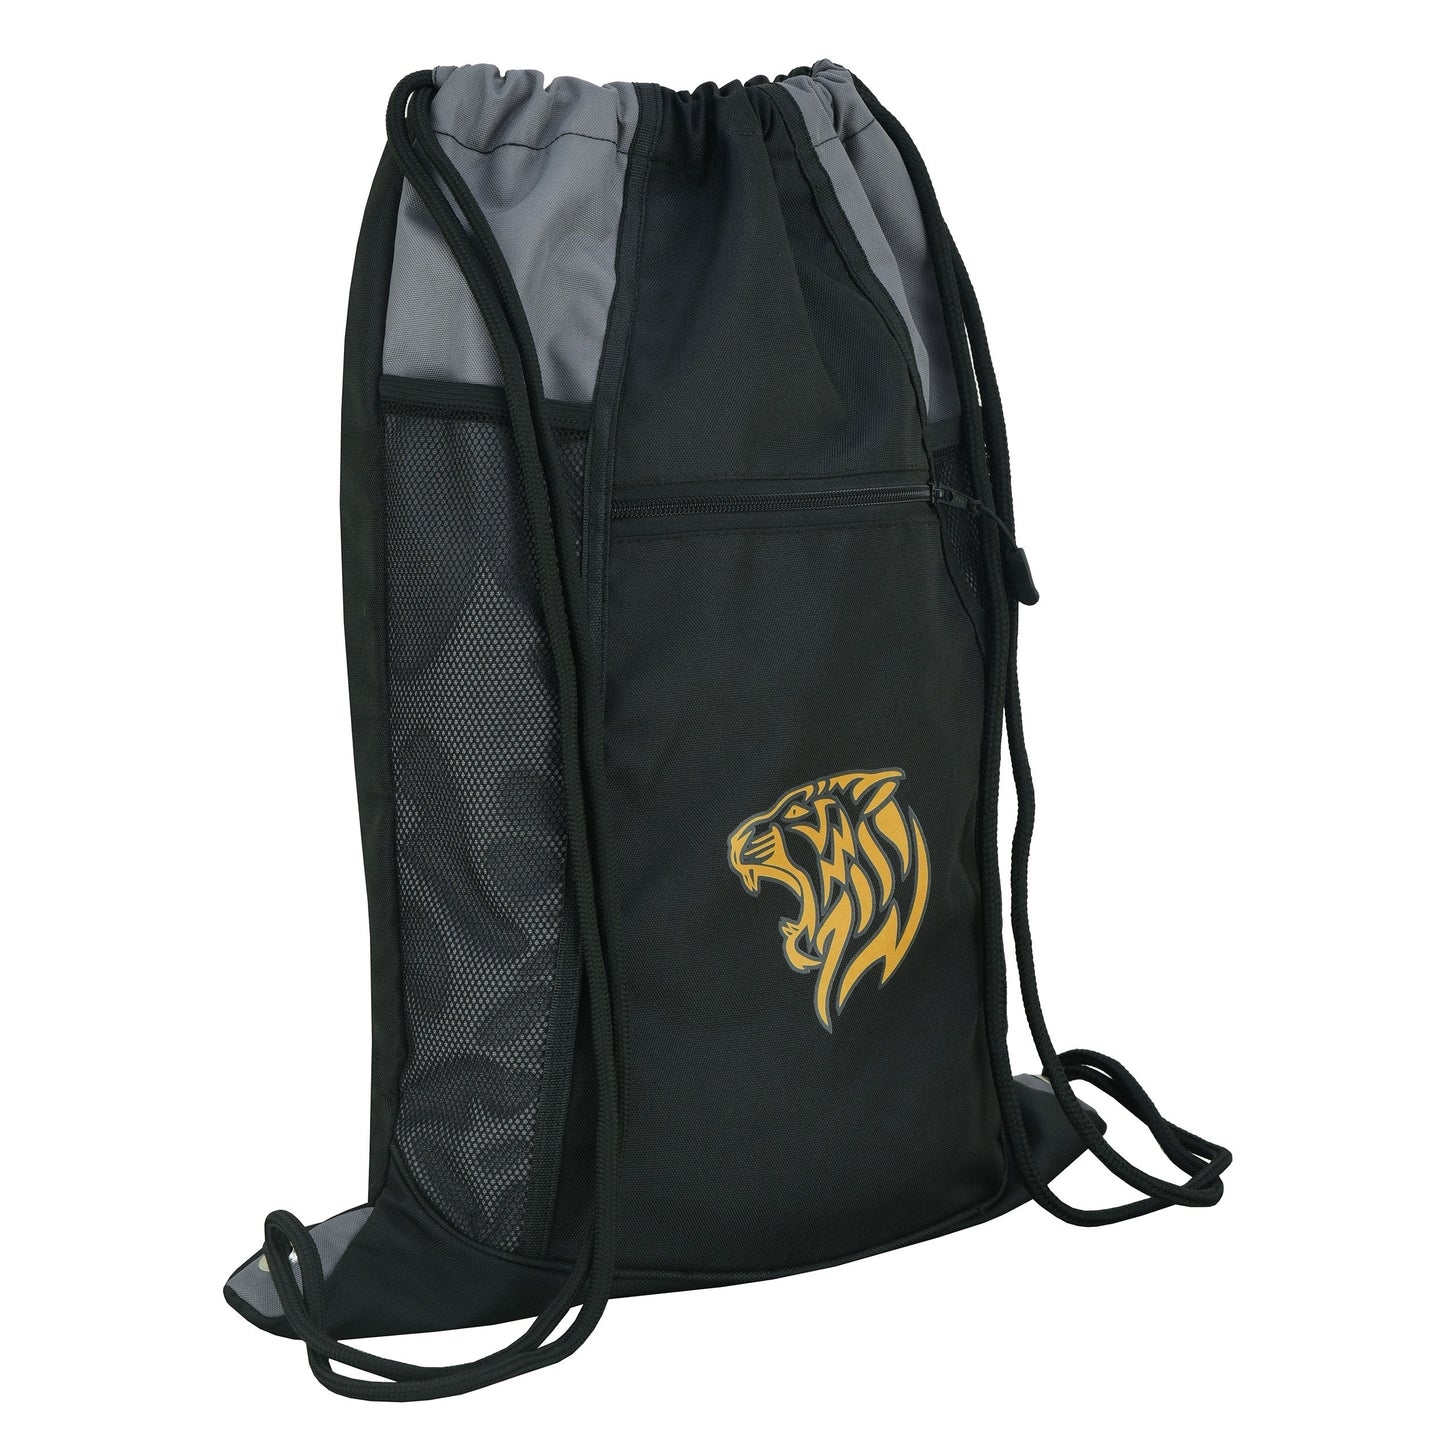 Jaguar Pro Gear - Deluxe Blackout Backpack For Gear Carry (Black)